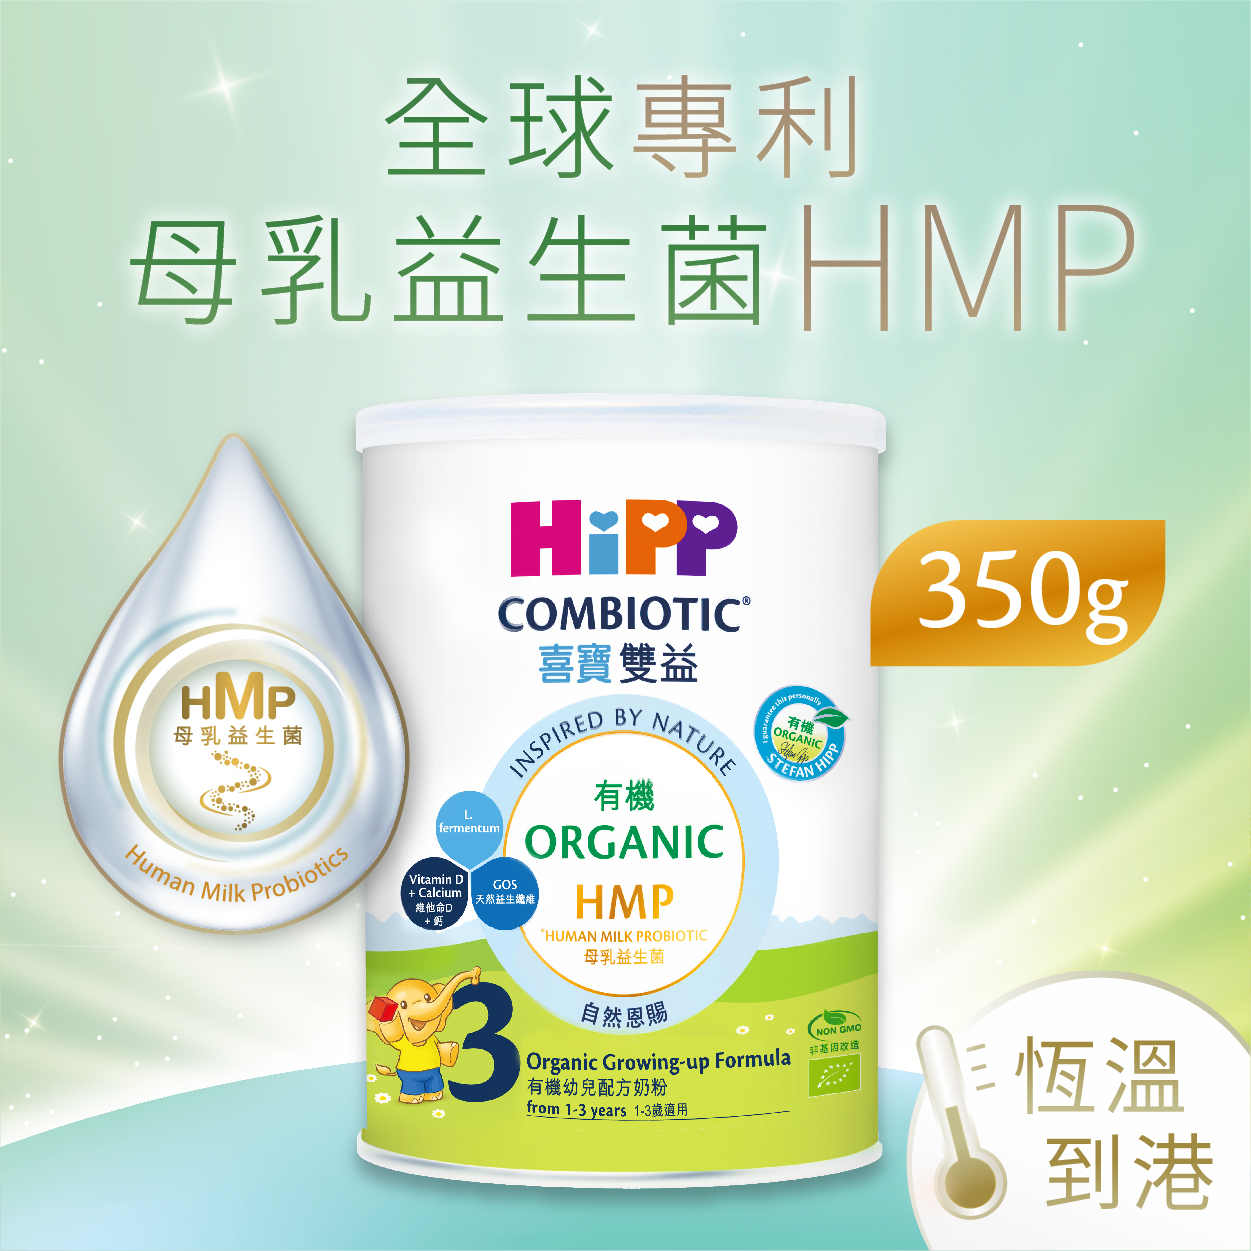 HiPP 3 Organic HMP Milk 350g - HiPP Official ESHOP